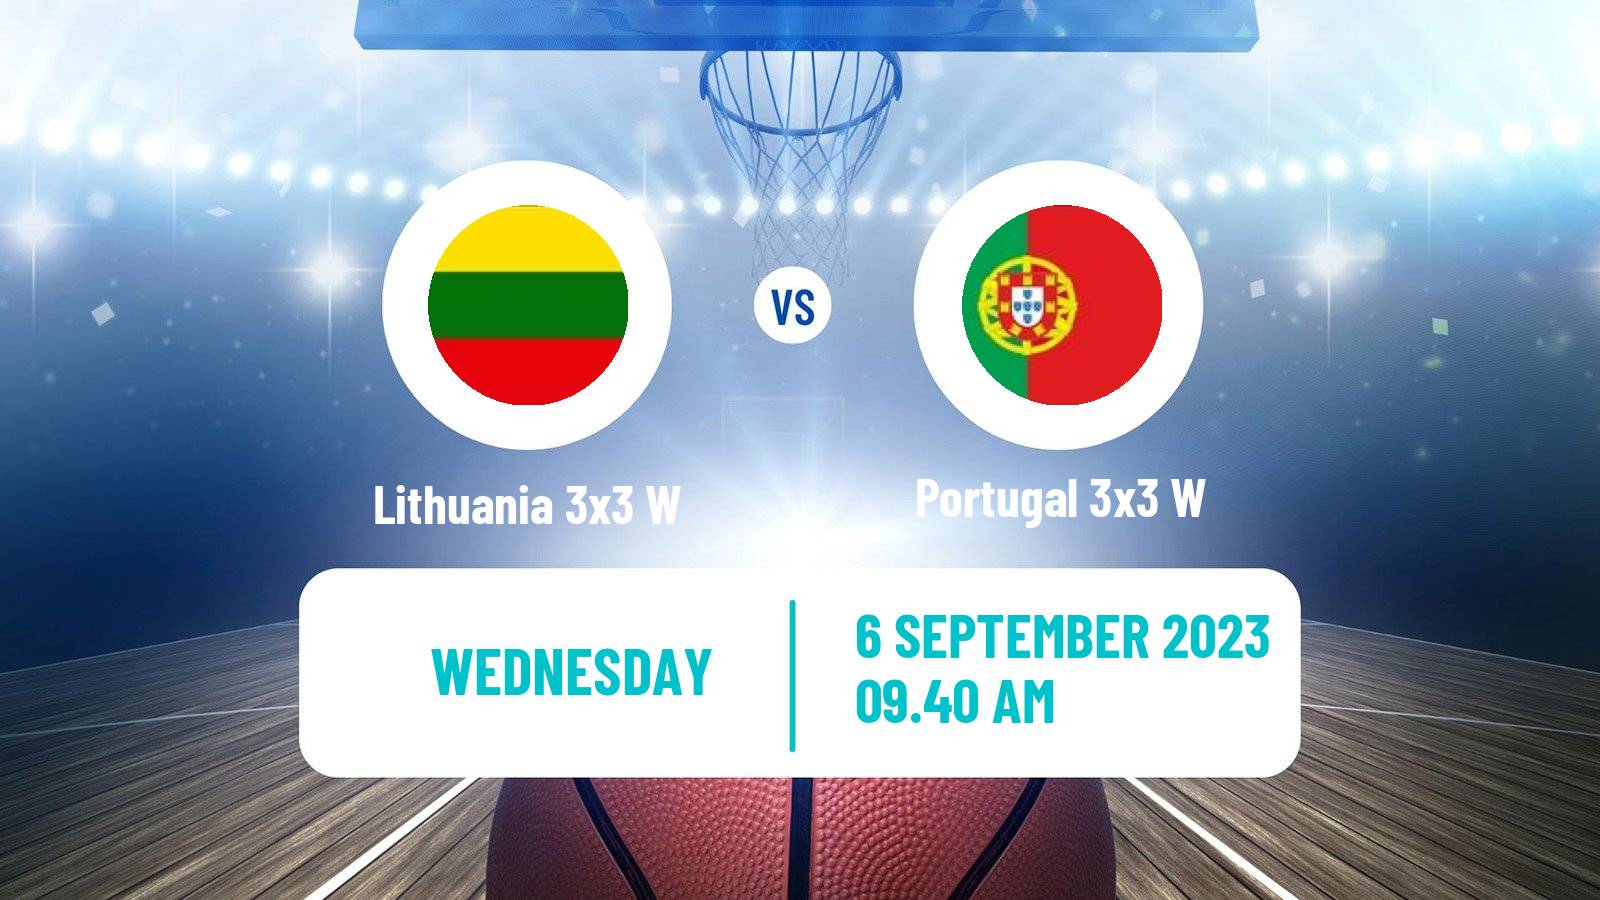 Basketball Europe Cup Basketball 3x3 Women Lithuania 3x3 W - Portugal 3x3 W